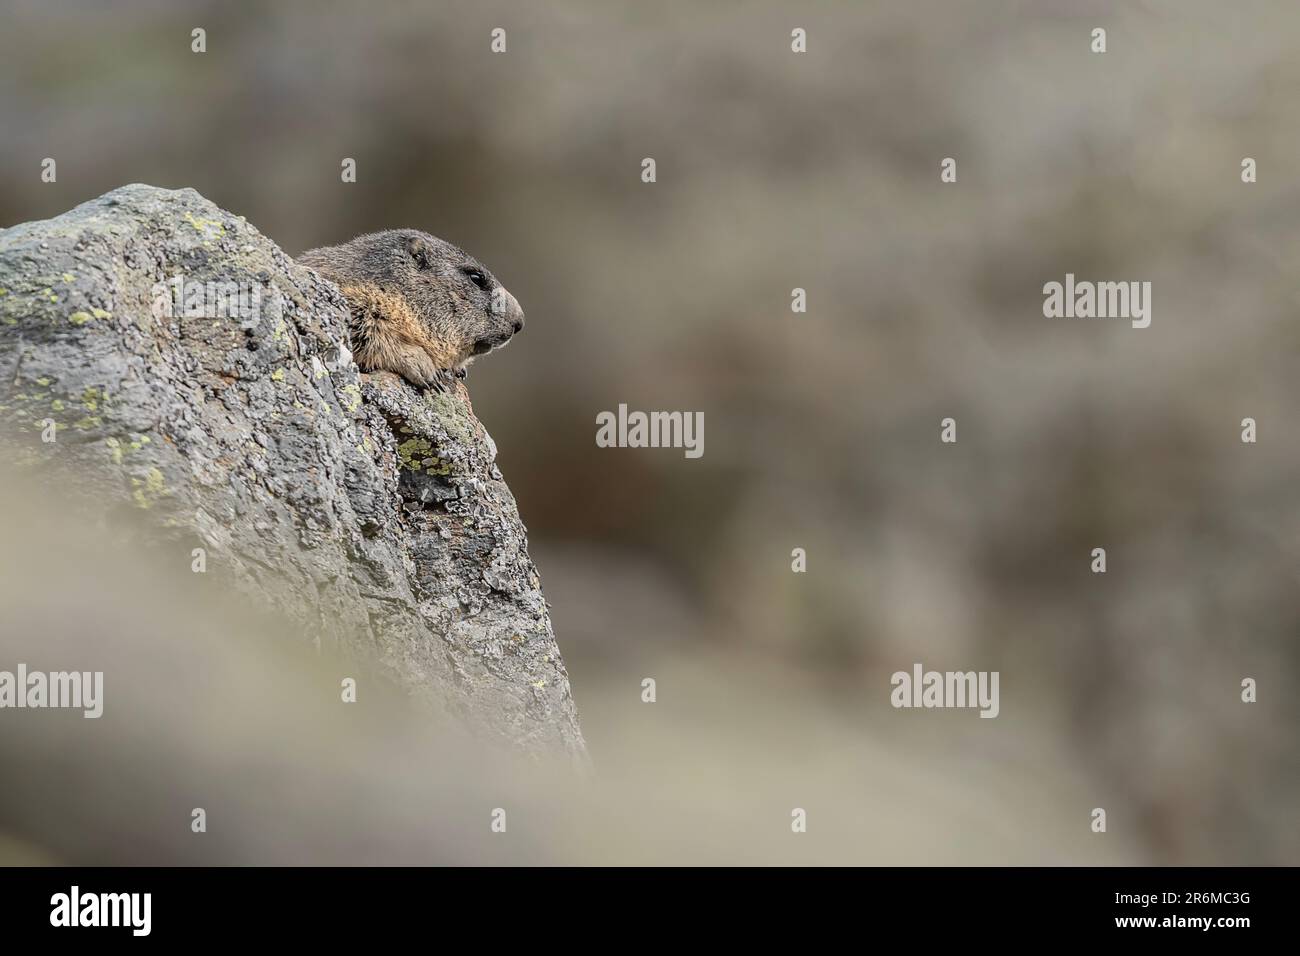 On the rock, the Alpine marmot (Marmota marmota) Stock Photo